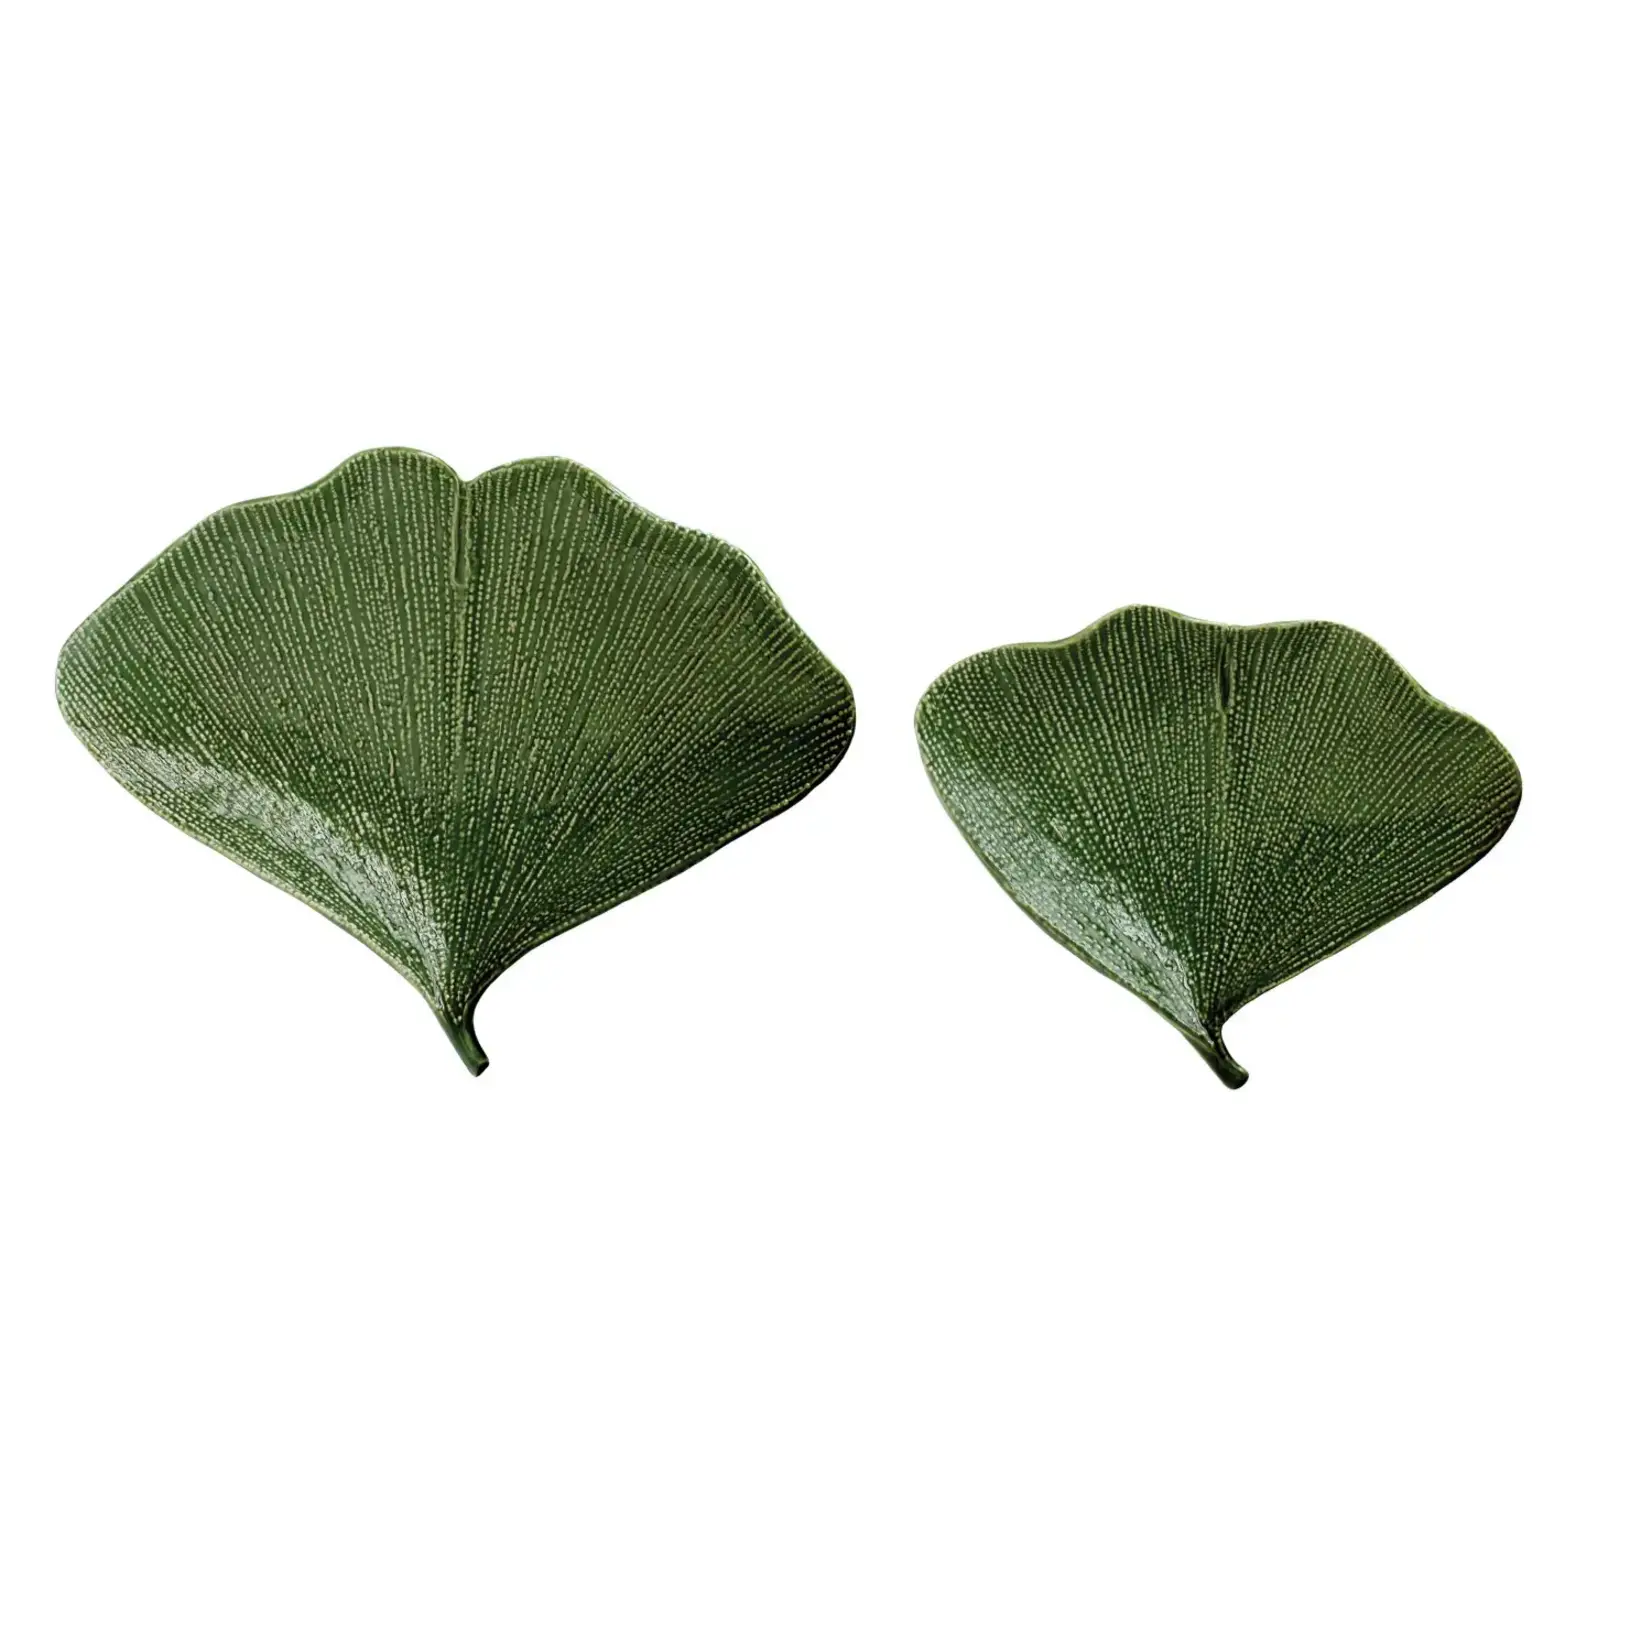 Gingko Leaf Shaped Plate - Large